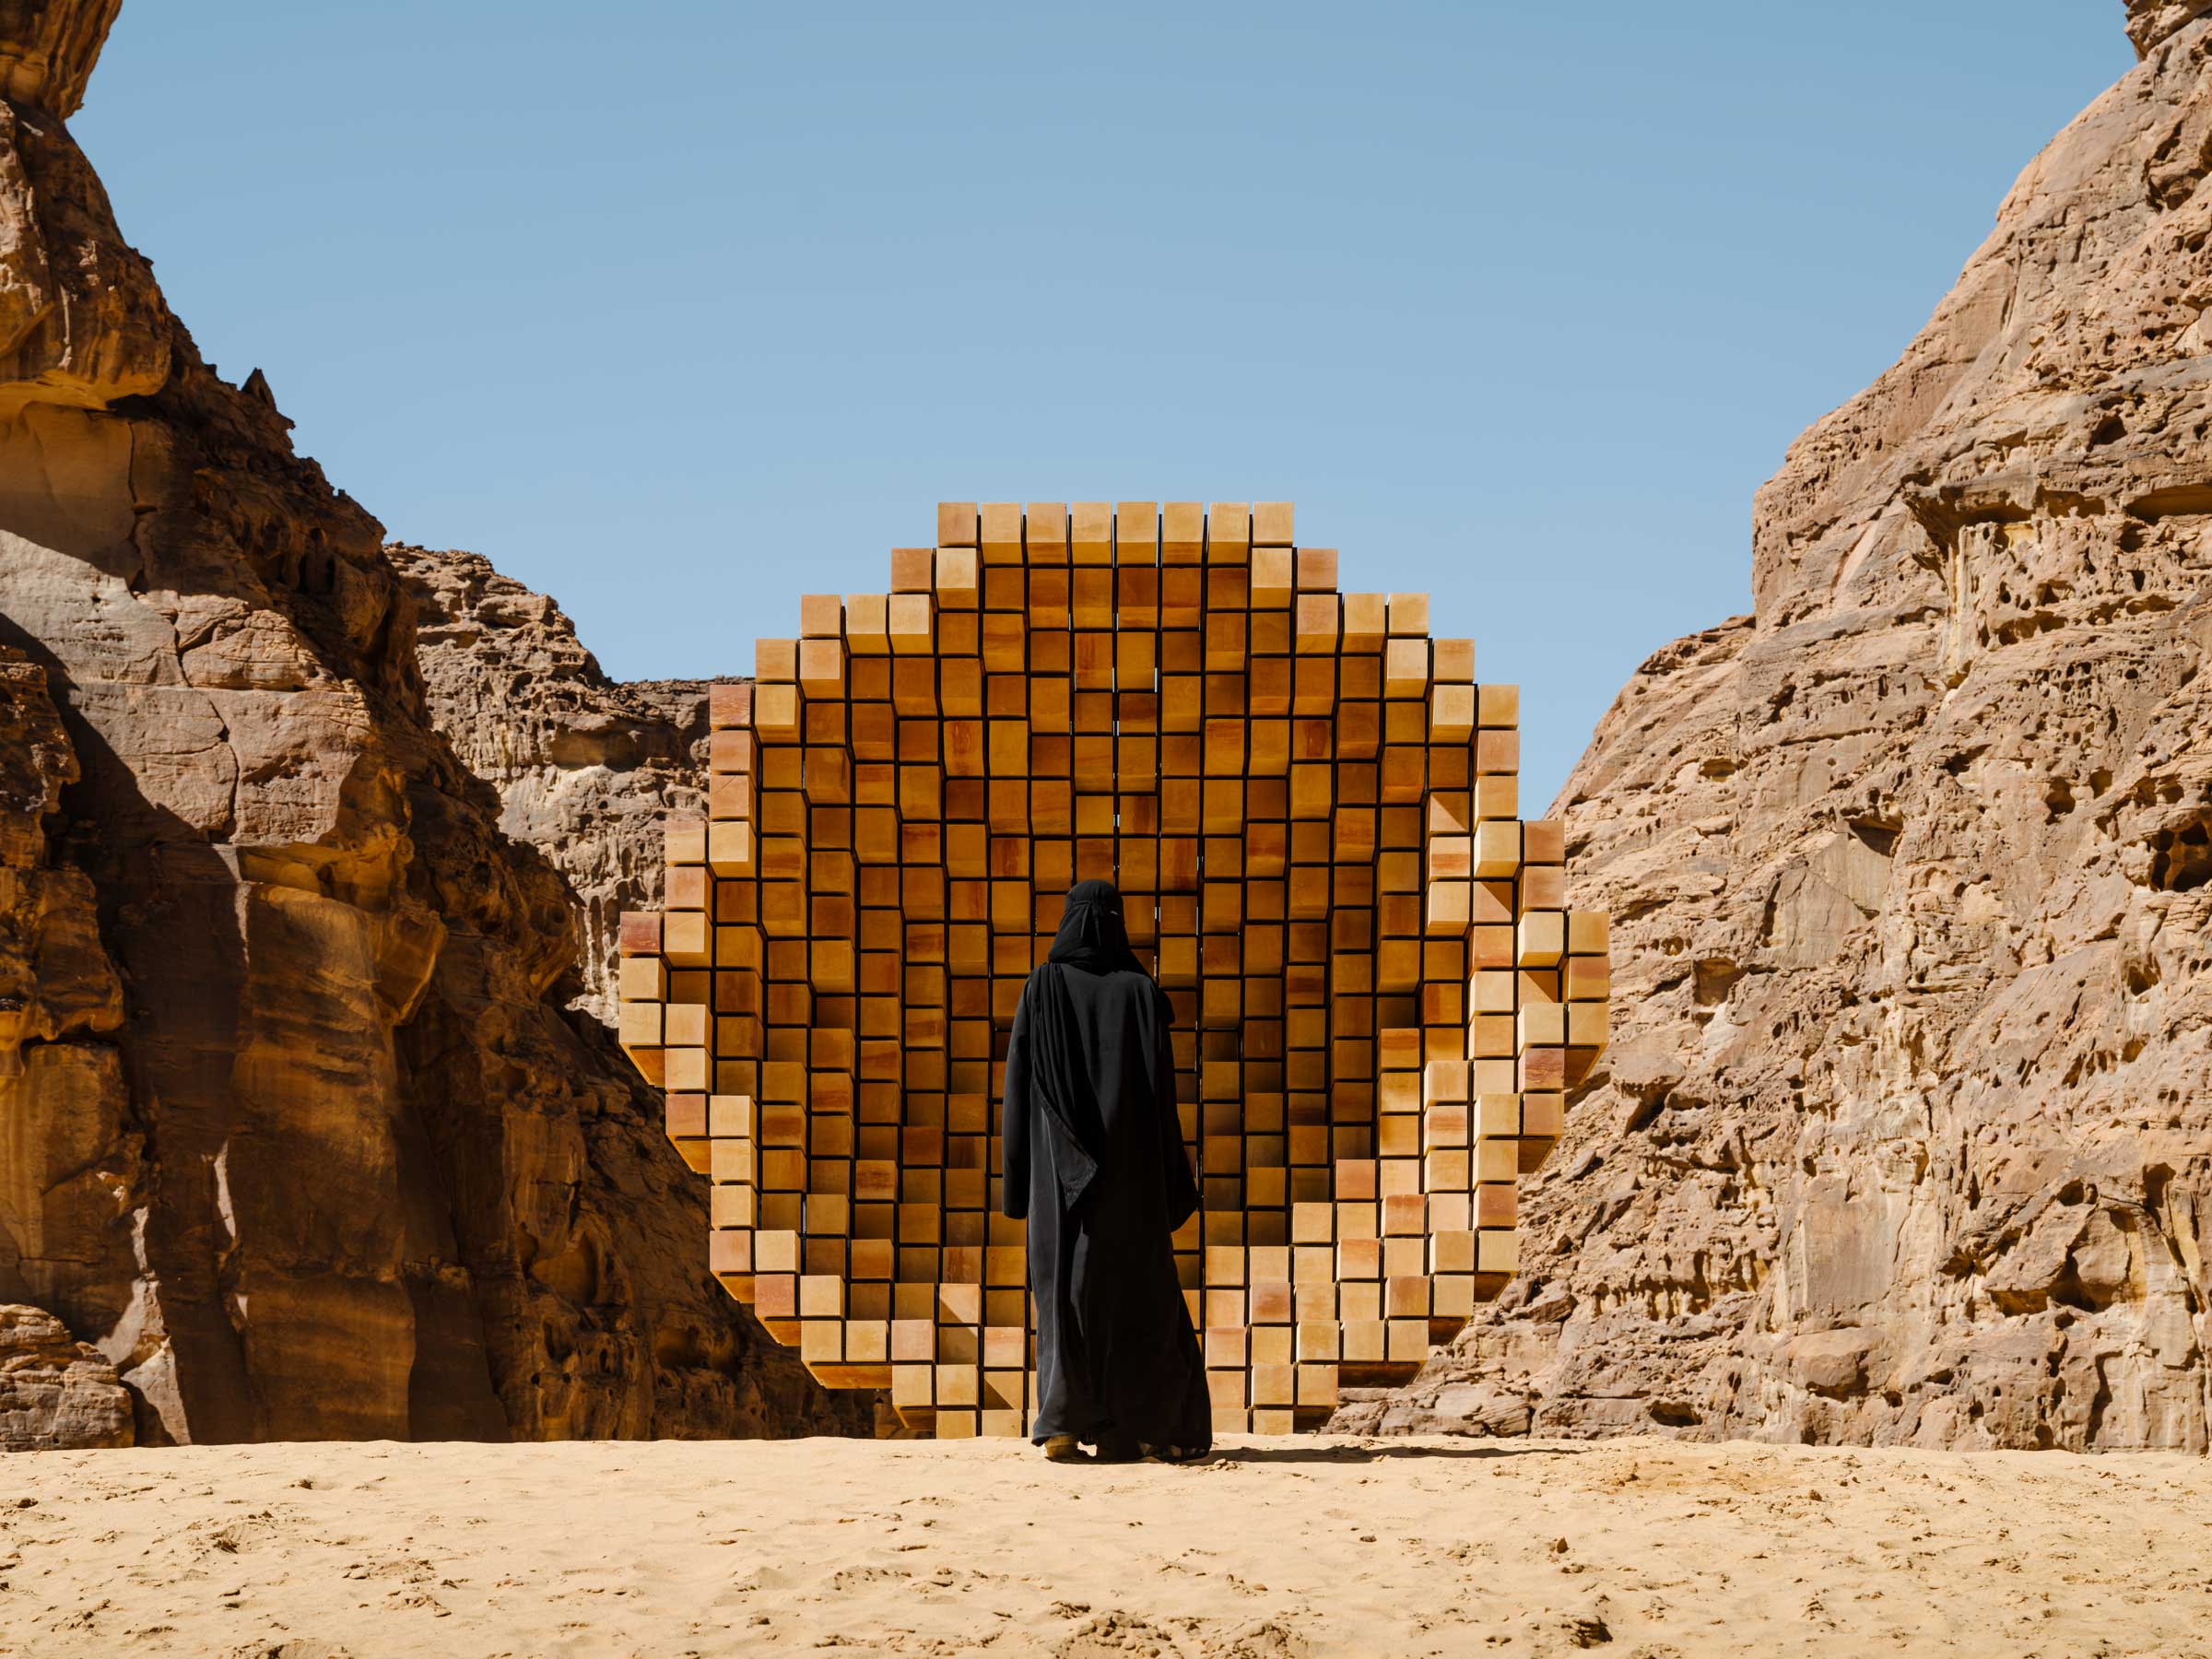 Dana Awartani, “Where the Dwellers Lay”, Desert X AlUla 2022